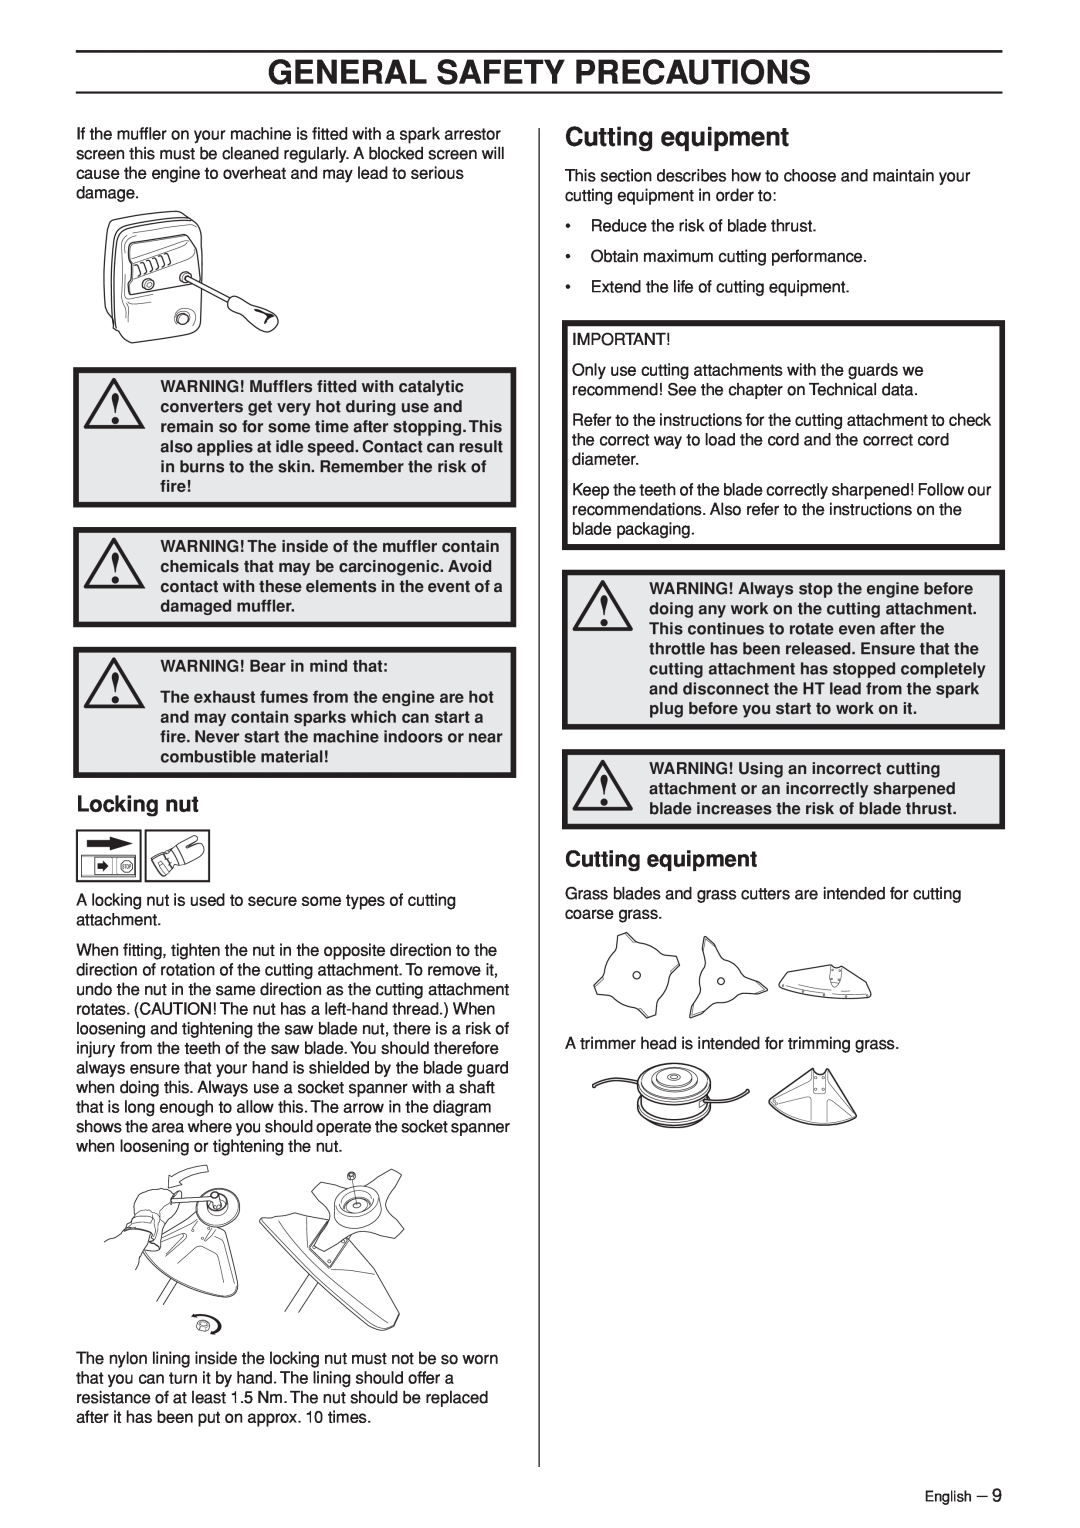 Husqvarna 326RJ manual Cutting equipment, Locking nut, General Safety Precautions 